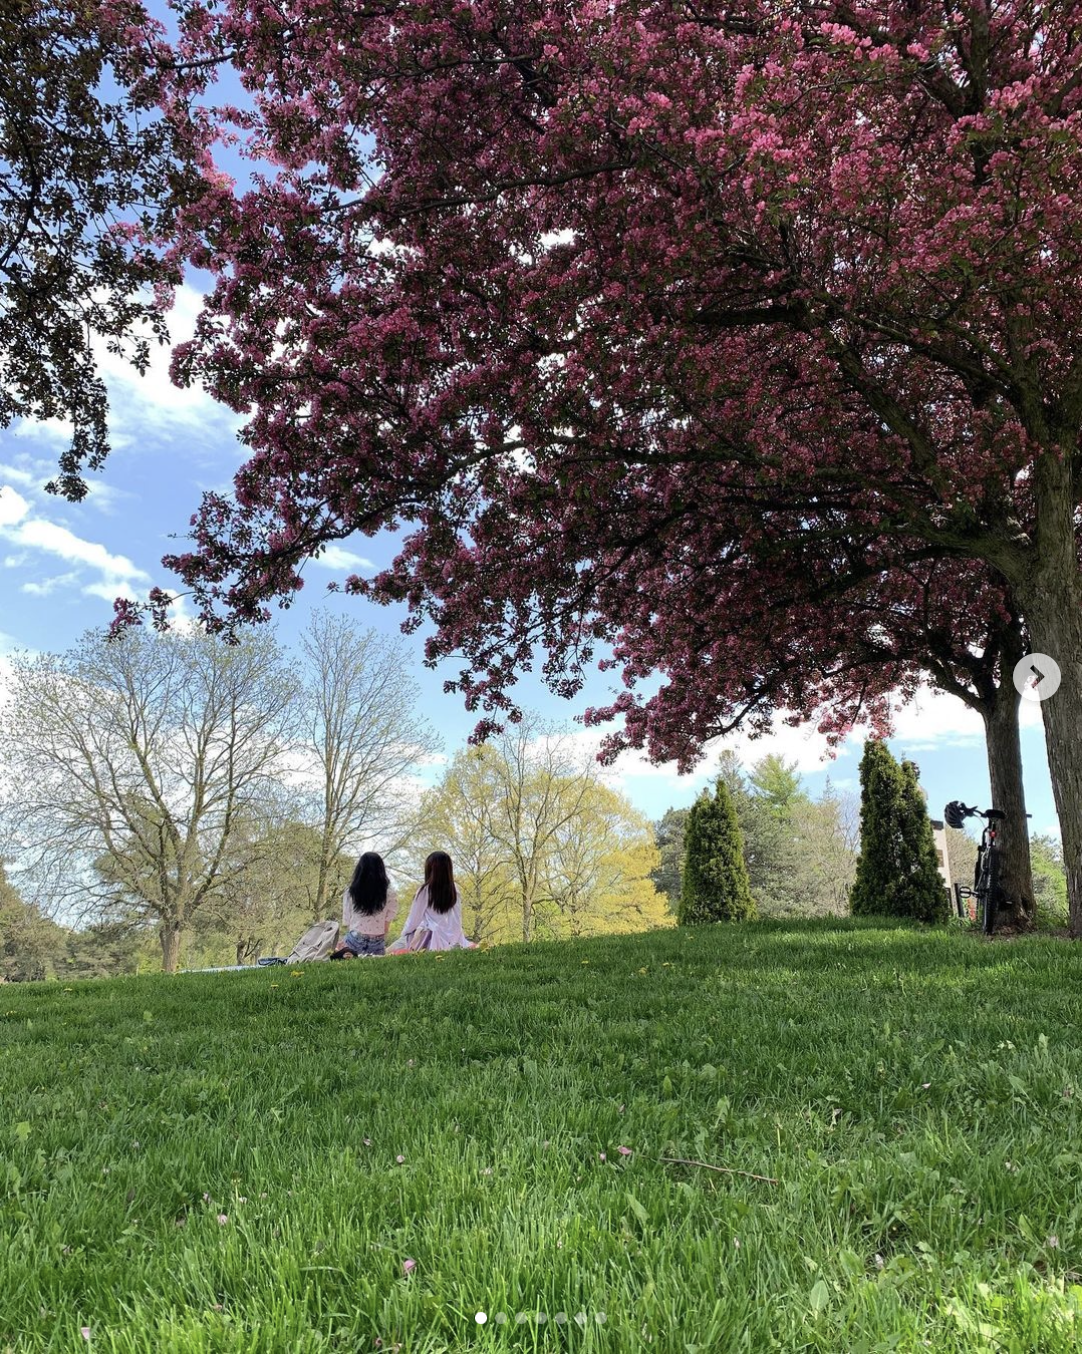 Girls sitting in grass under cherry blossom tree